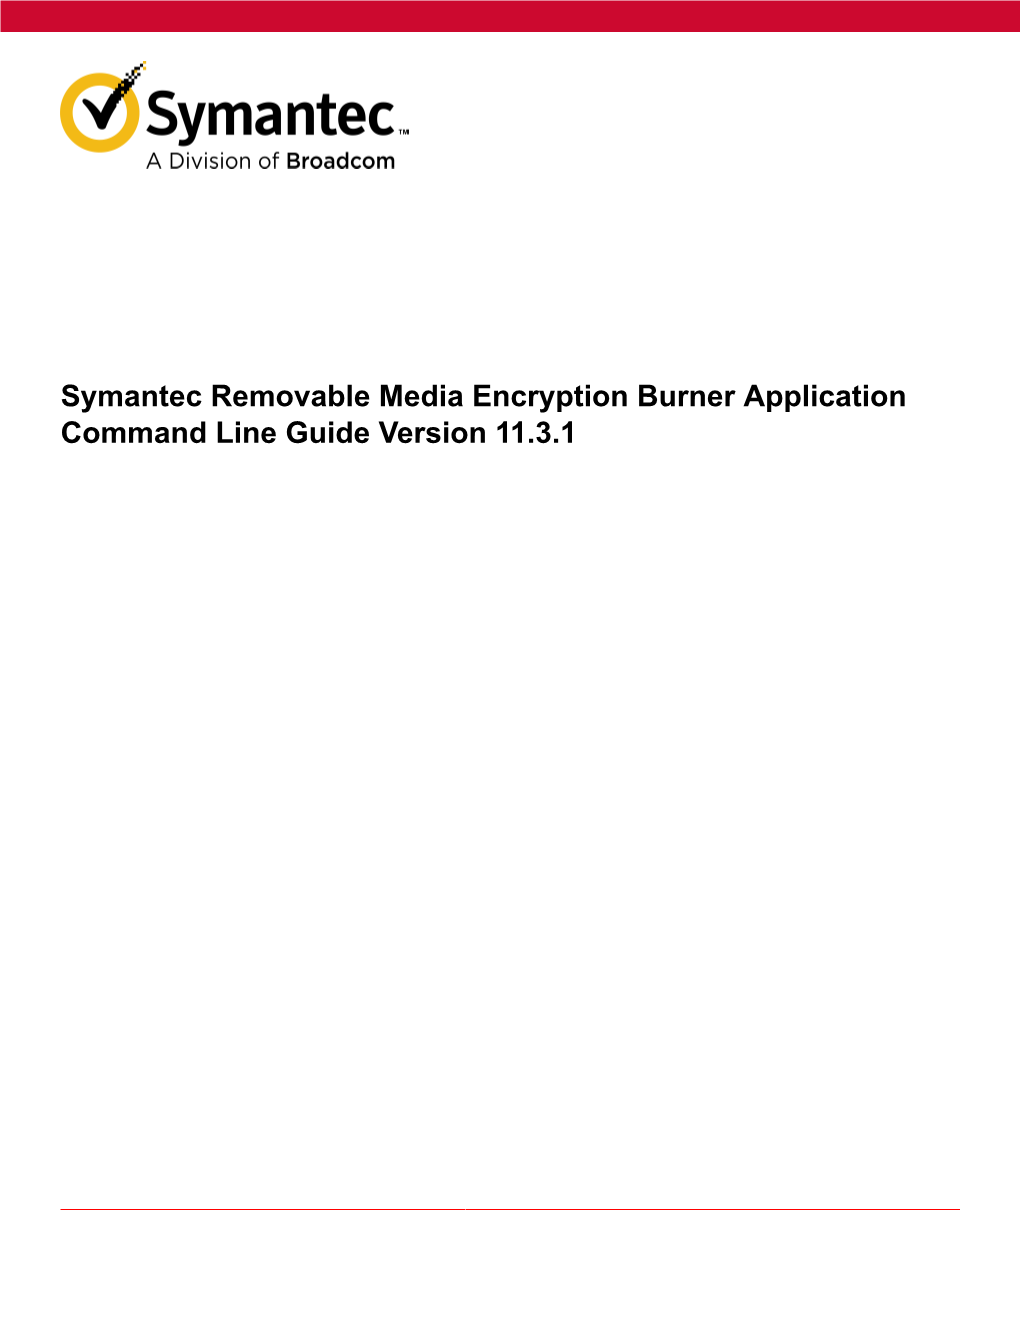 Symantec Removable Media Encryption Burner Application Command Line Guide Version 11.3.1